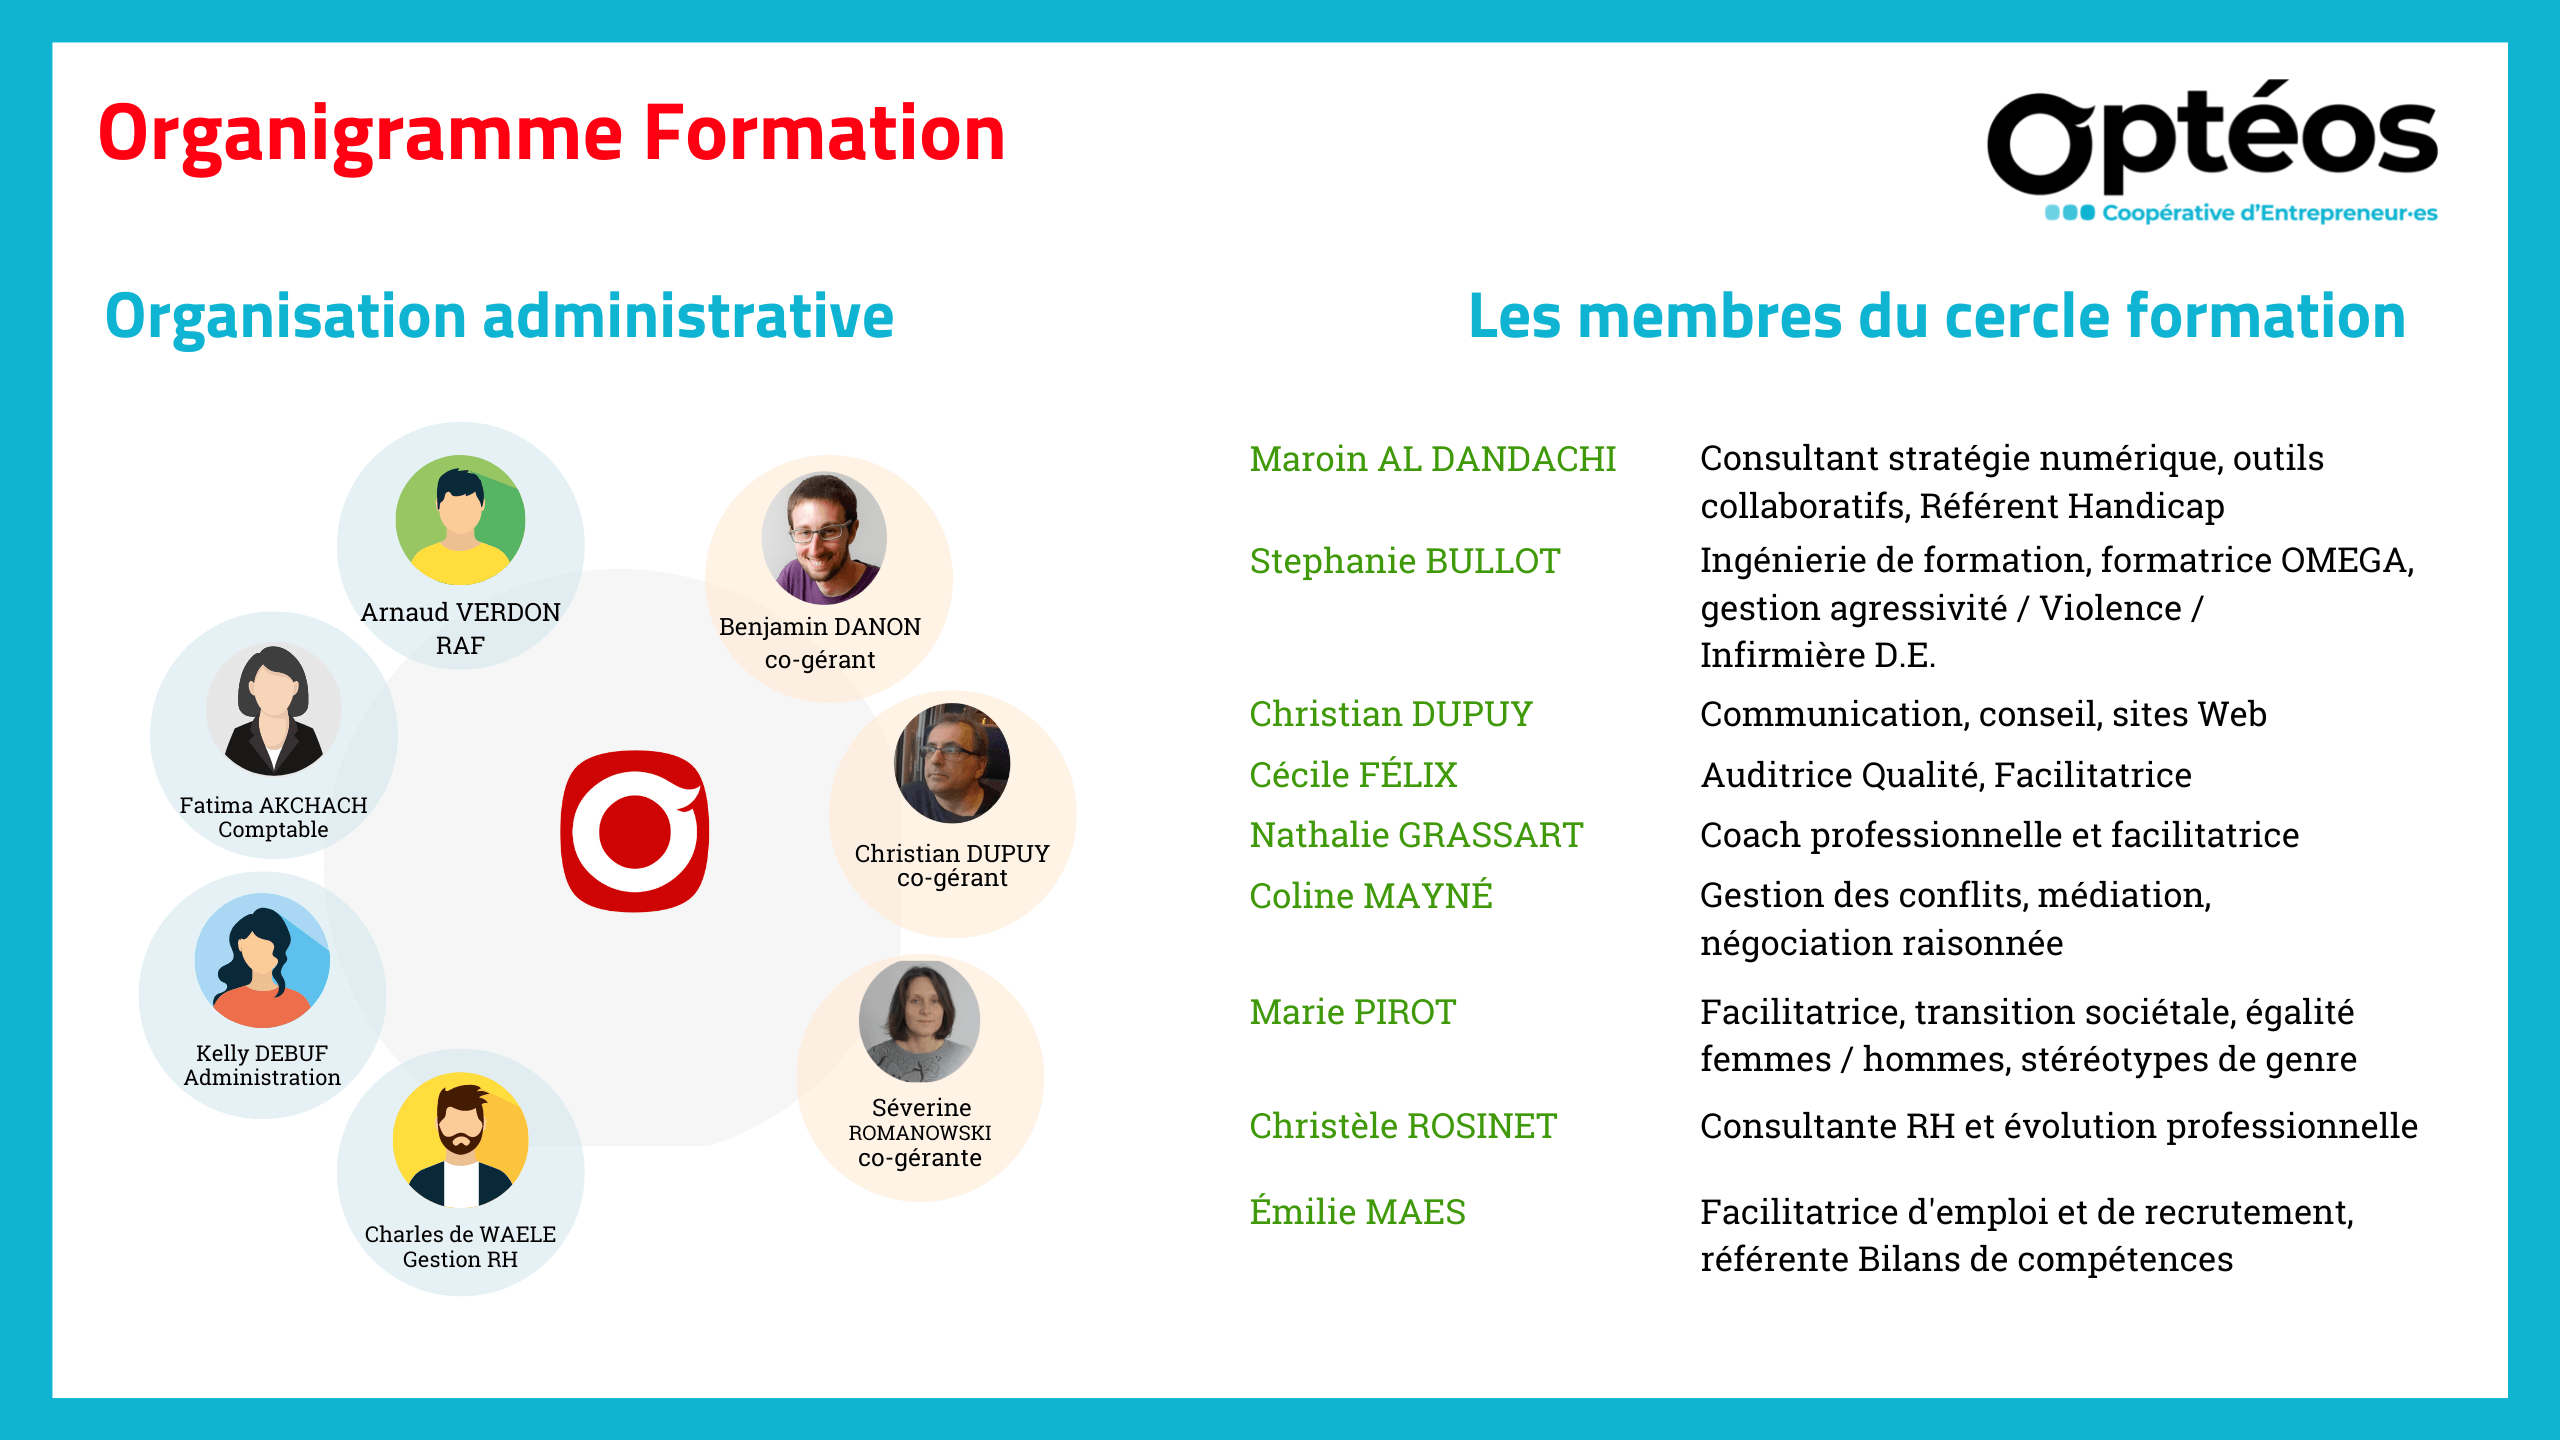 Organisation administrative + les membres du cercle formation, organigramme Formation, Optéos